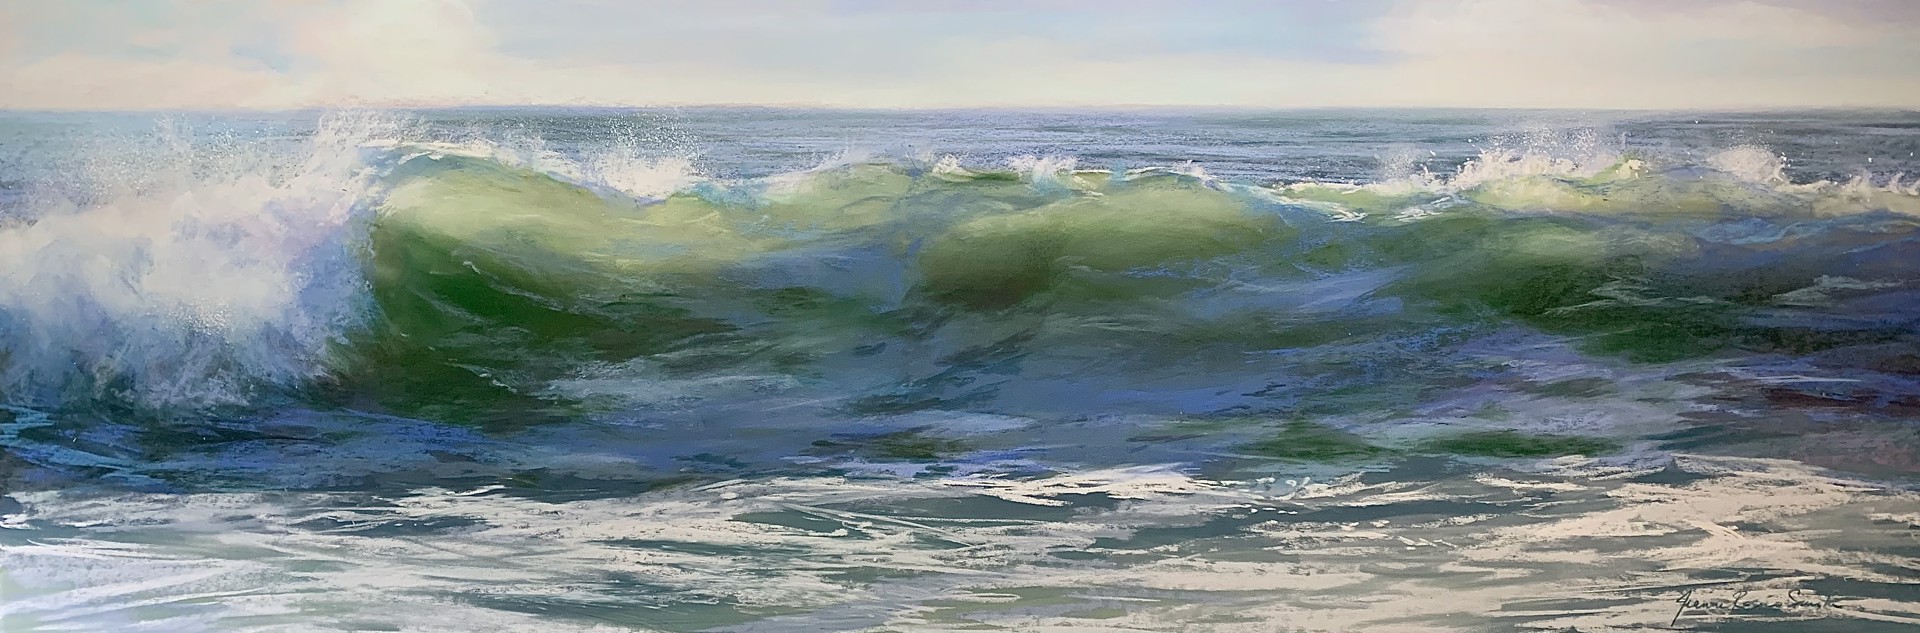 Surfside by Jeanne Rosier Smith